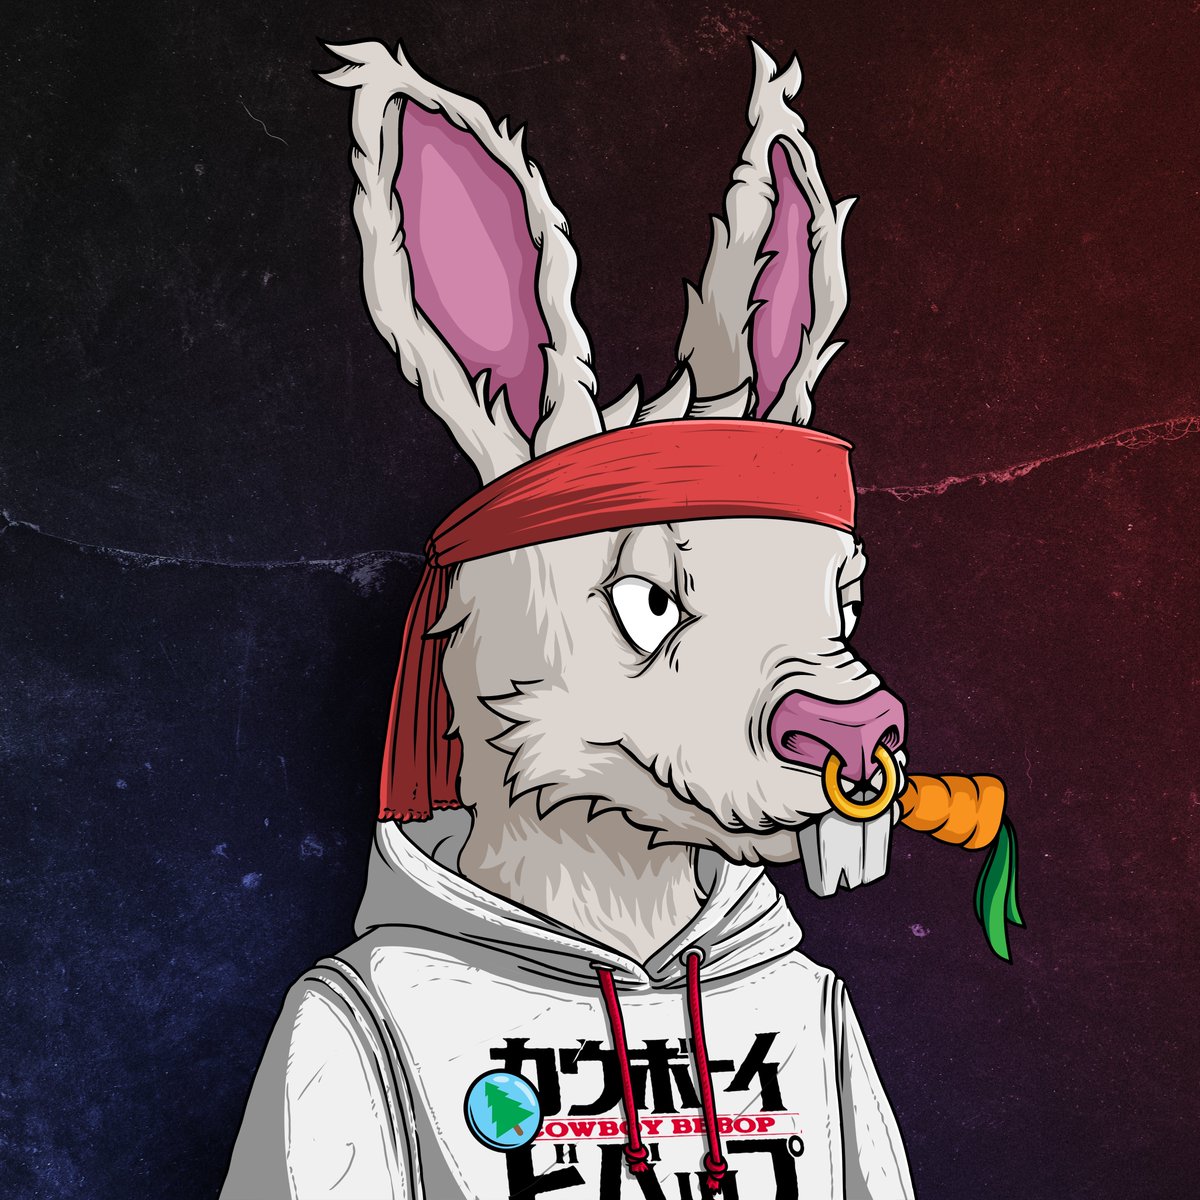 I’m taking custody of this choice rabbit. @DeadRabbitRS will rise again!